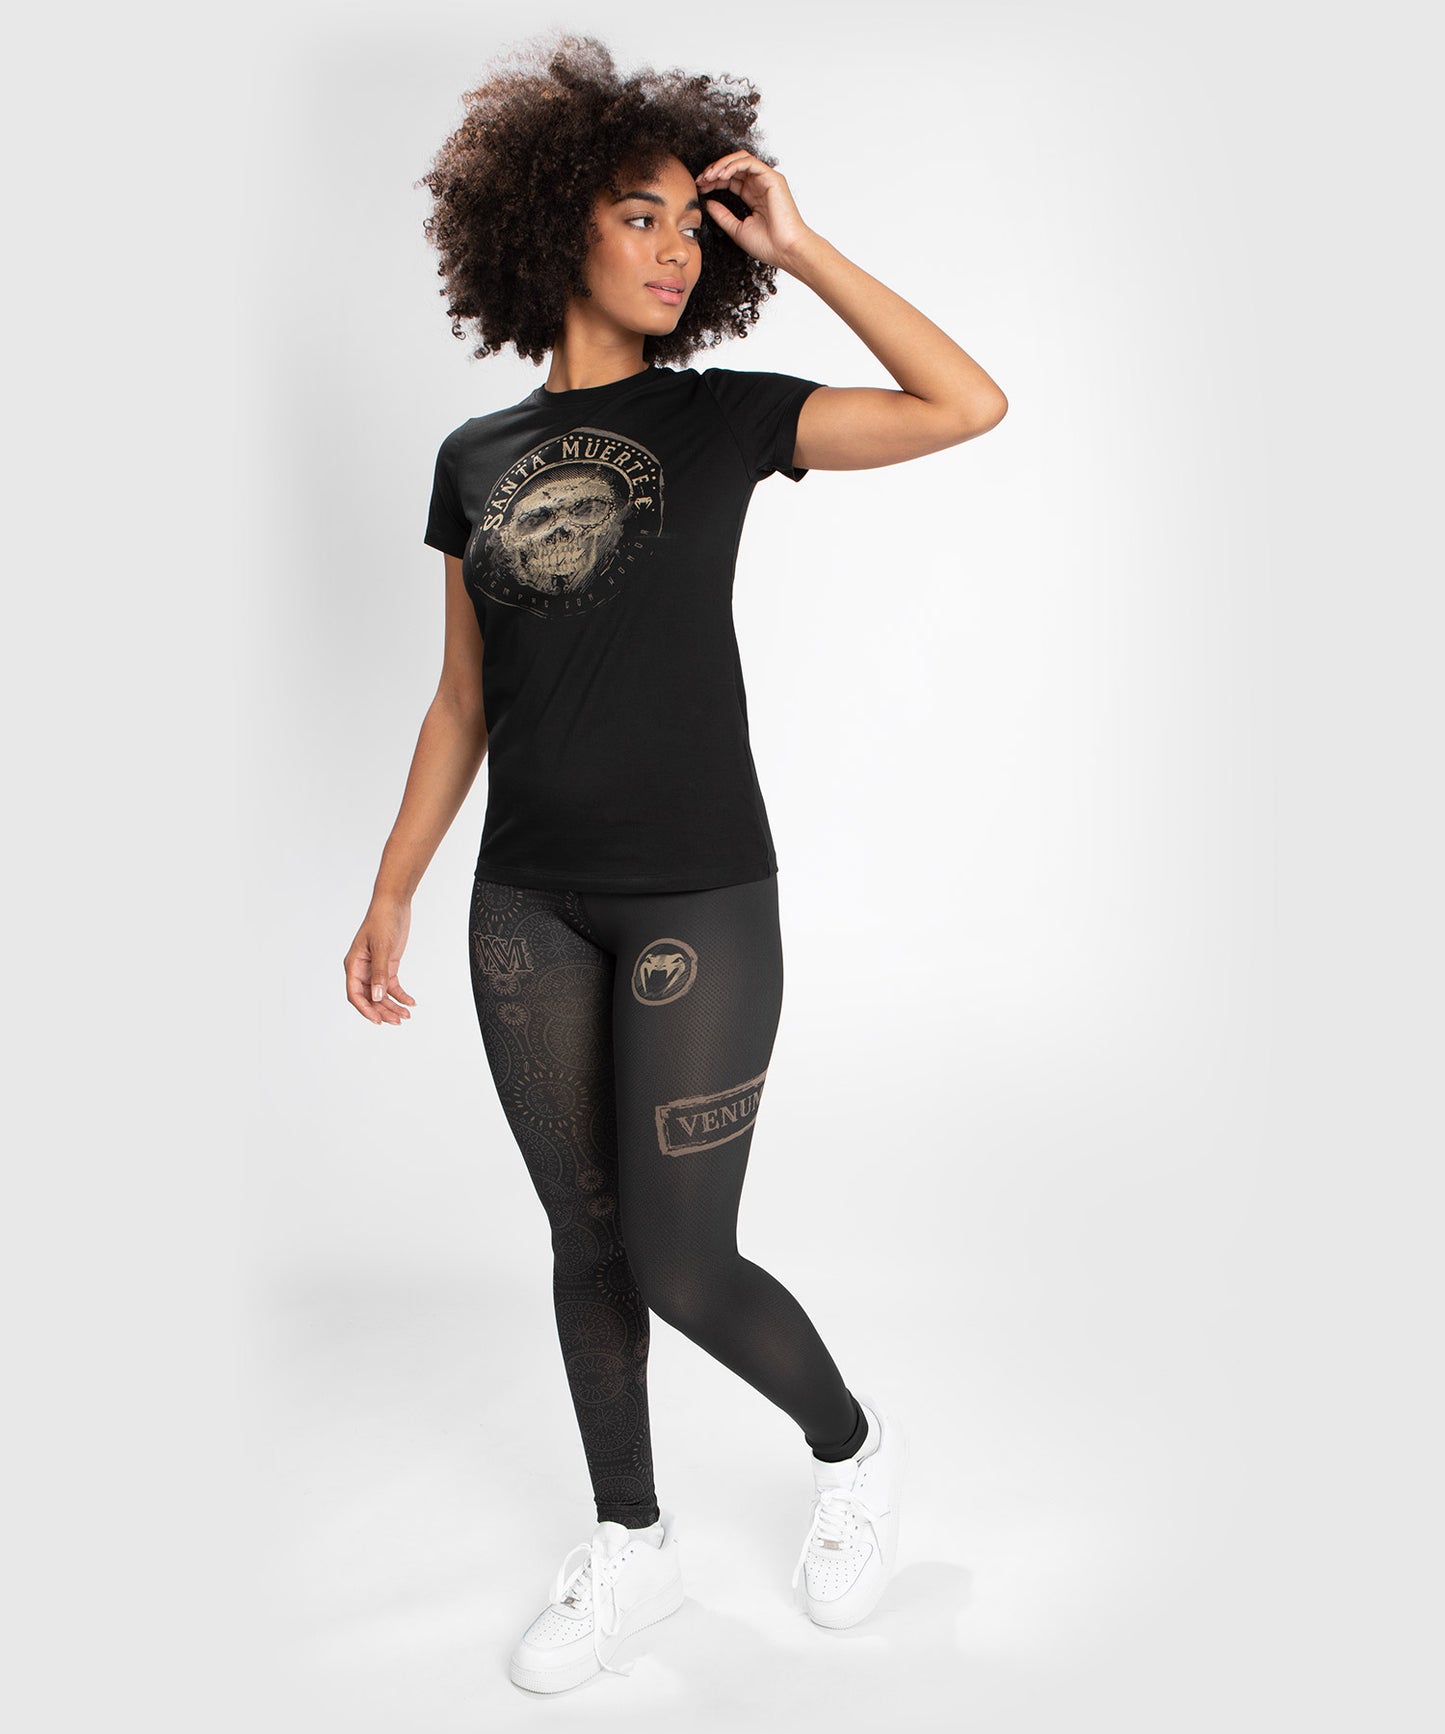 T-shirt Santa Muerte Dark Side Venum Woman - Black/Brown